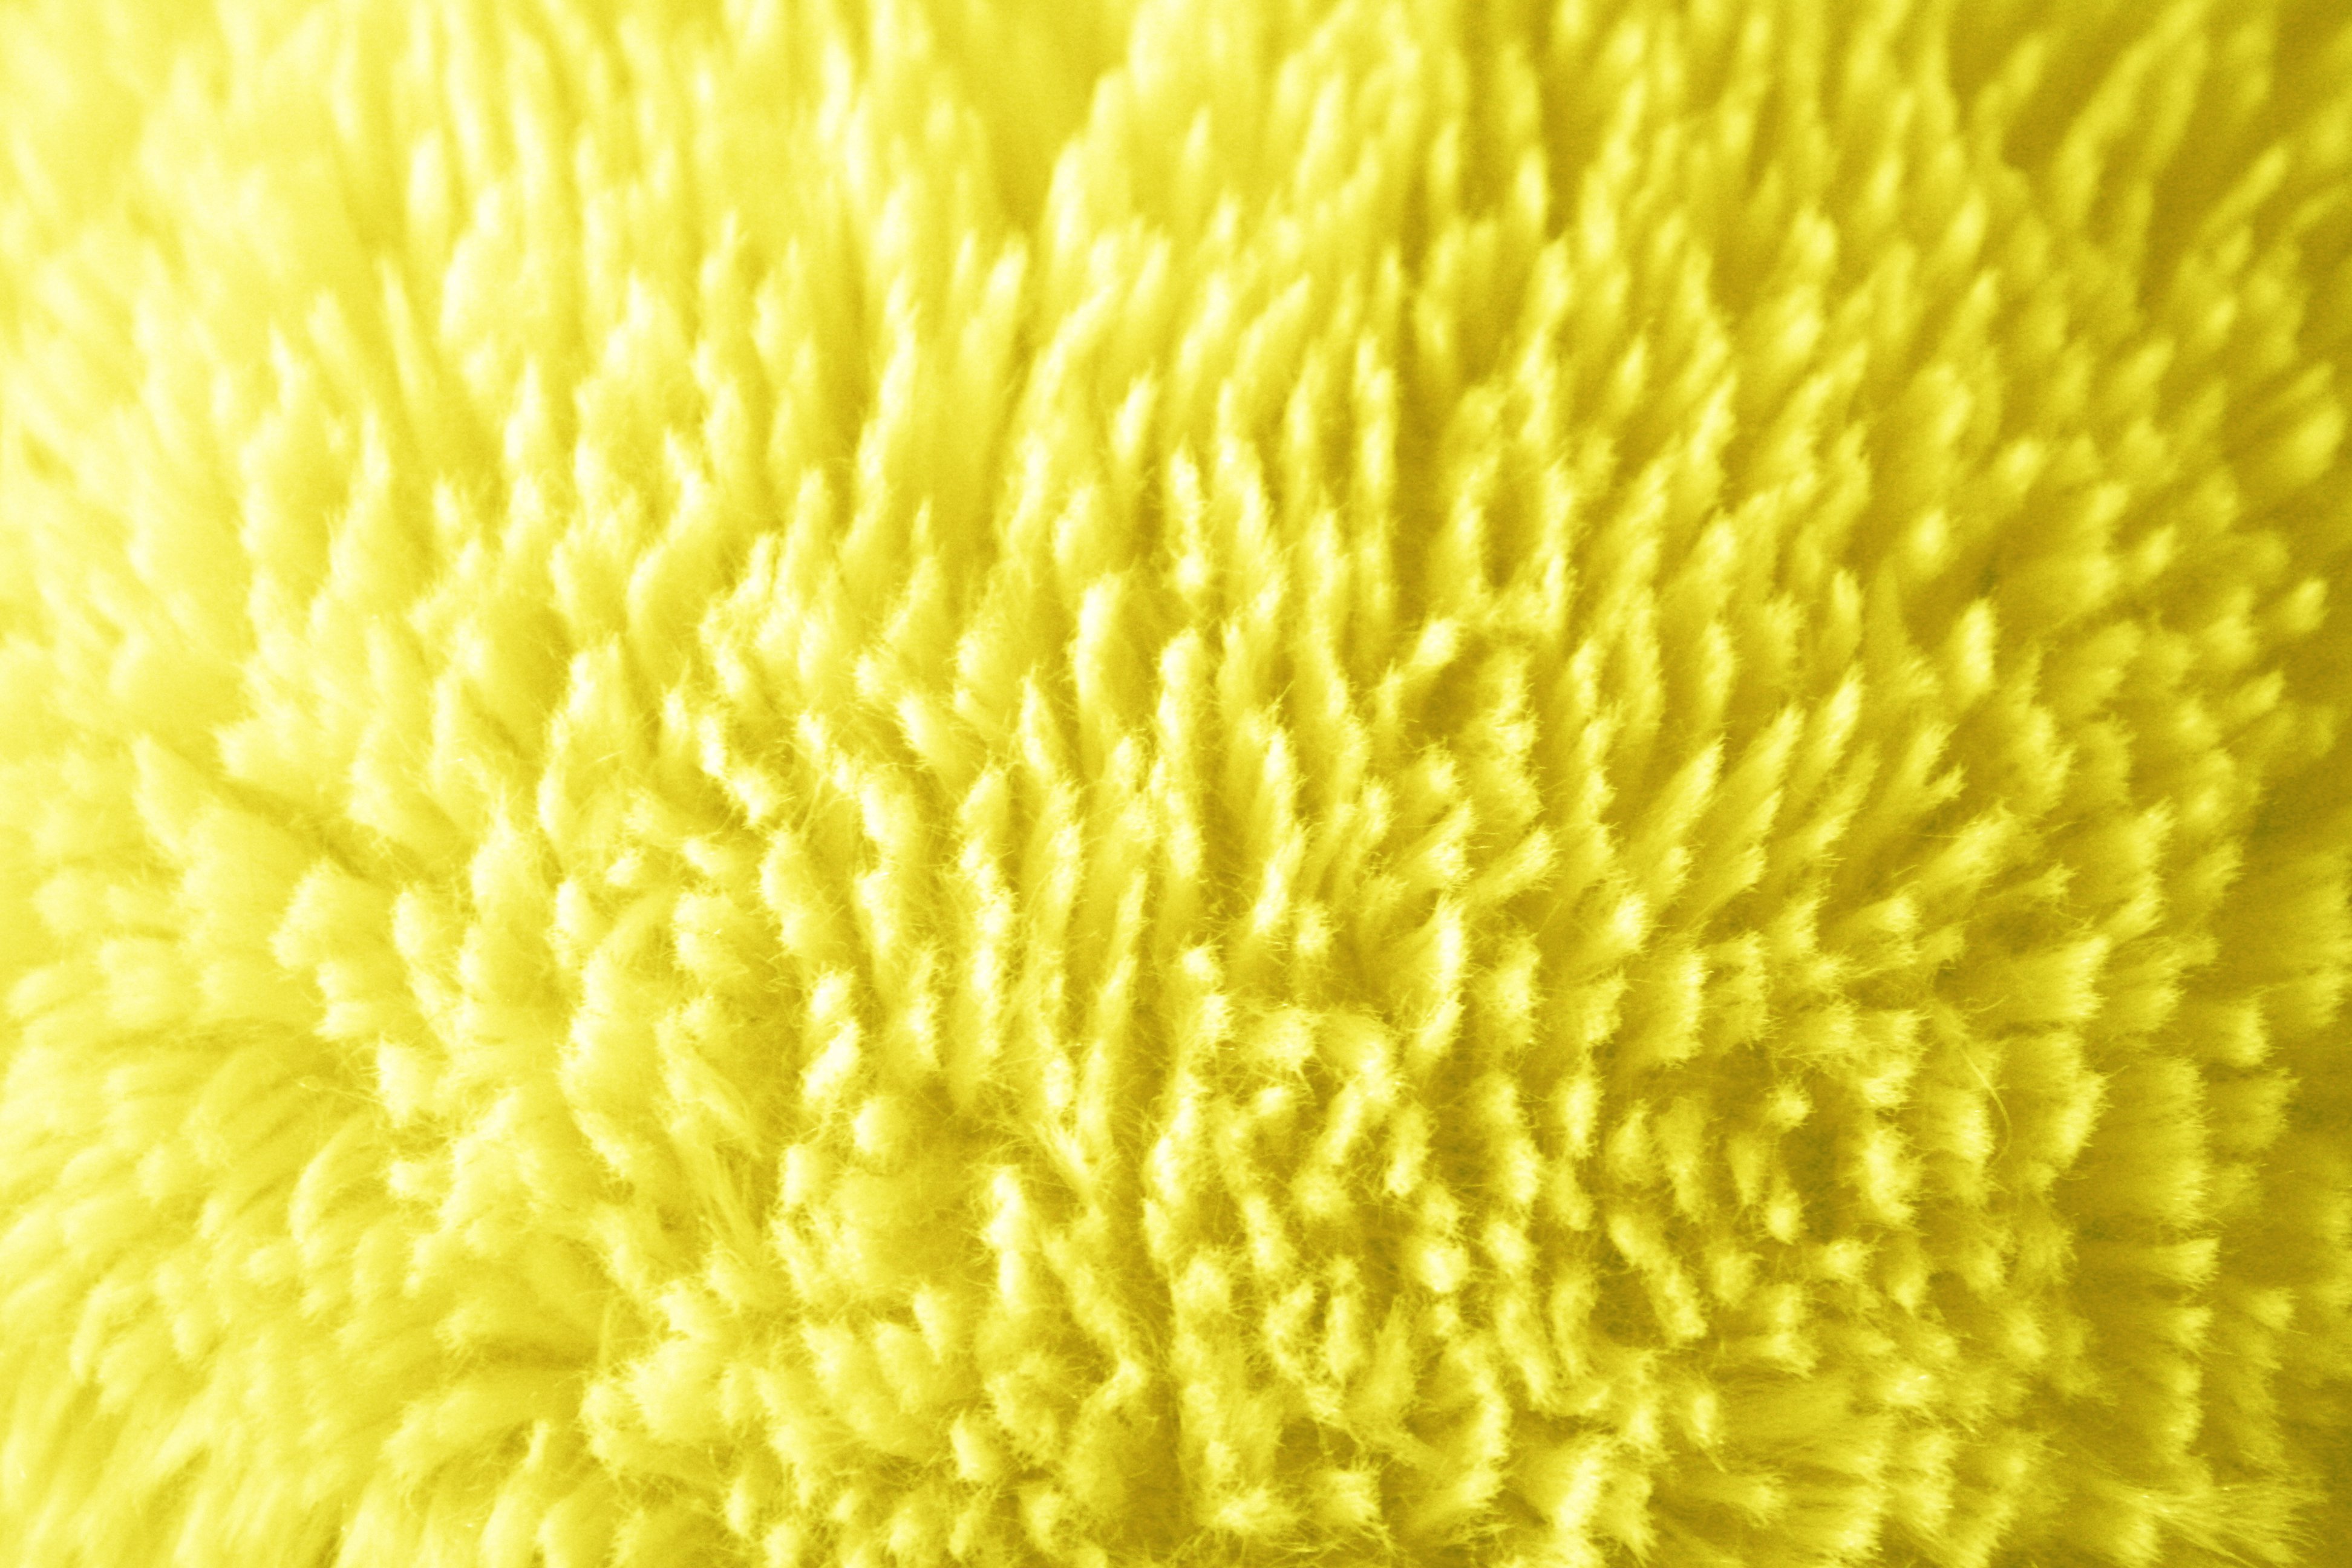 Fuzzy Yellow